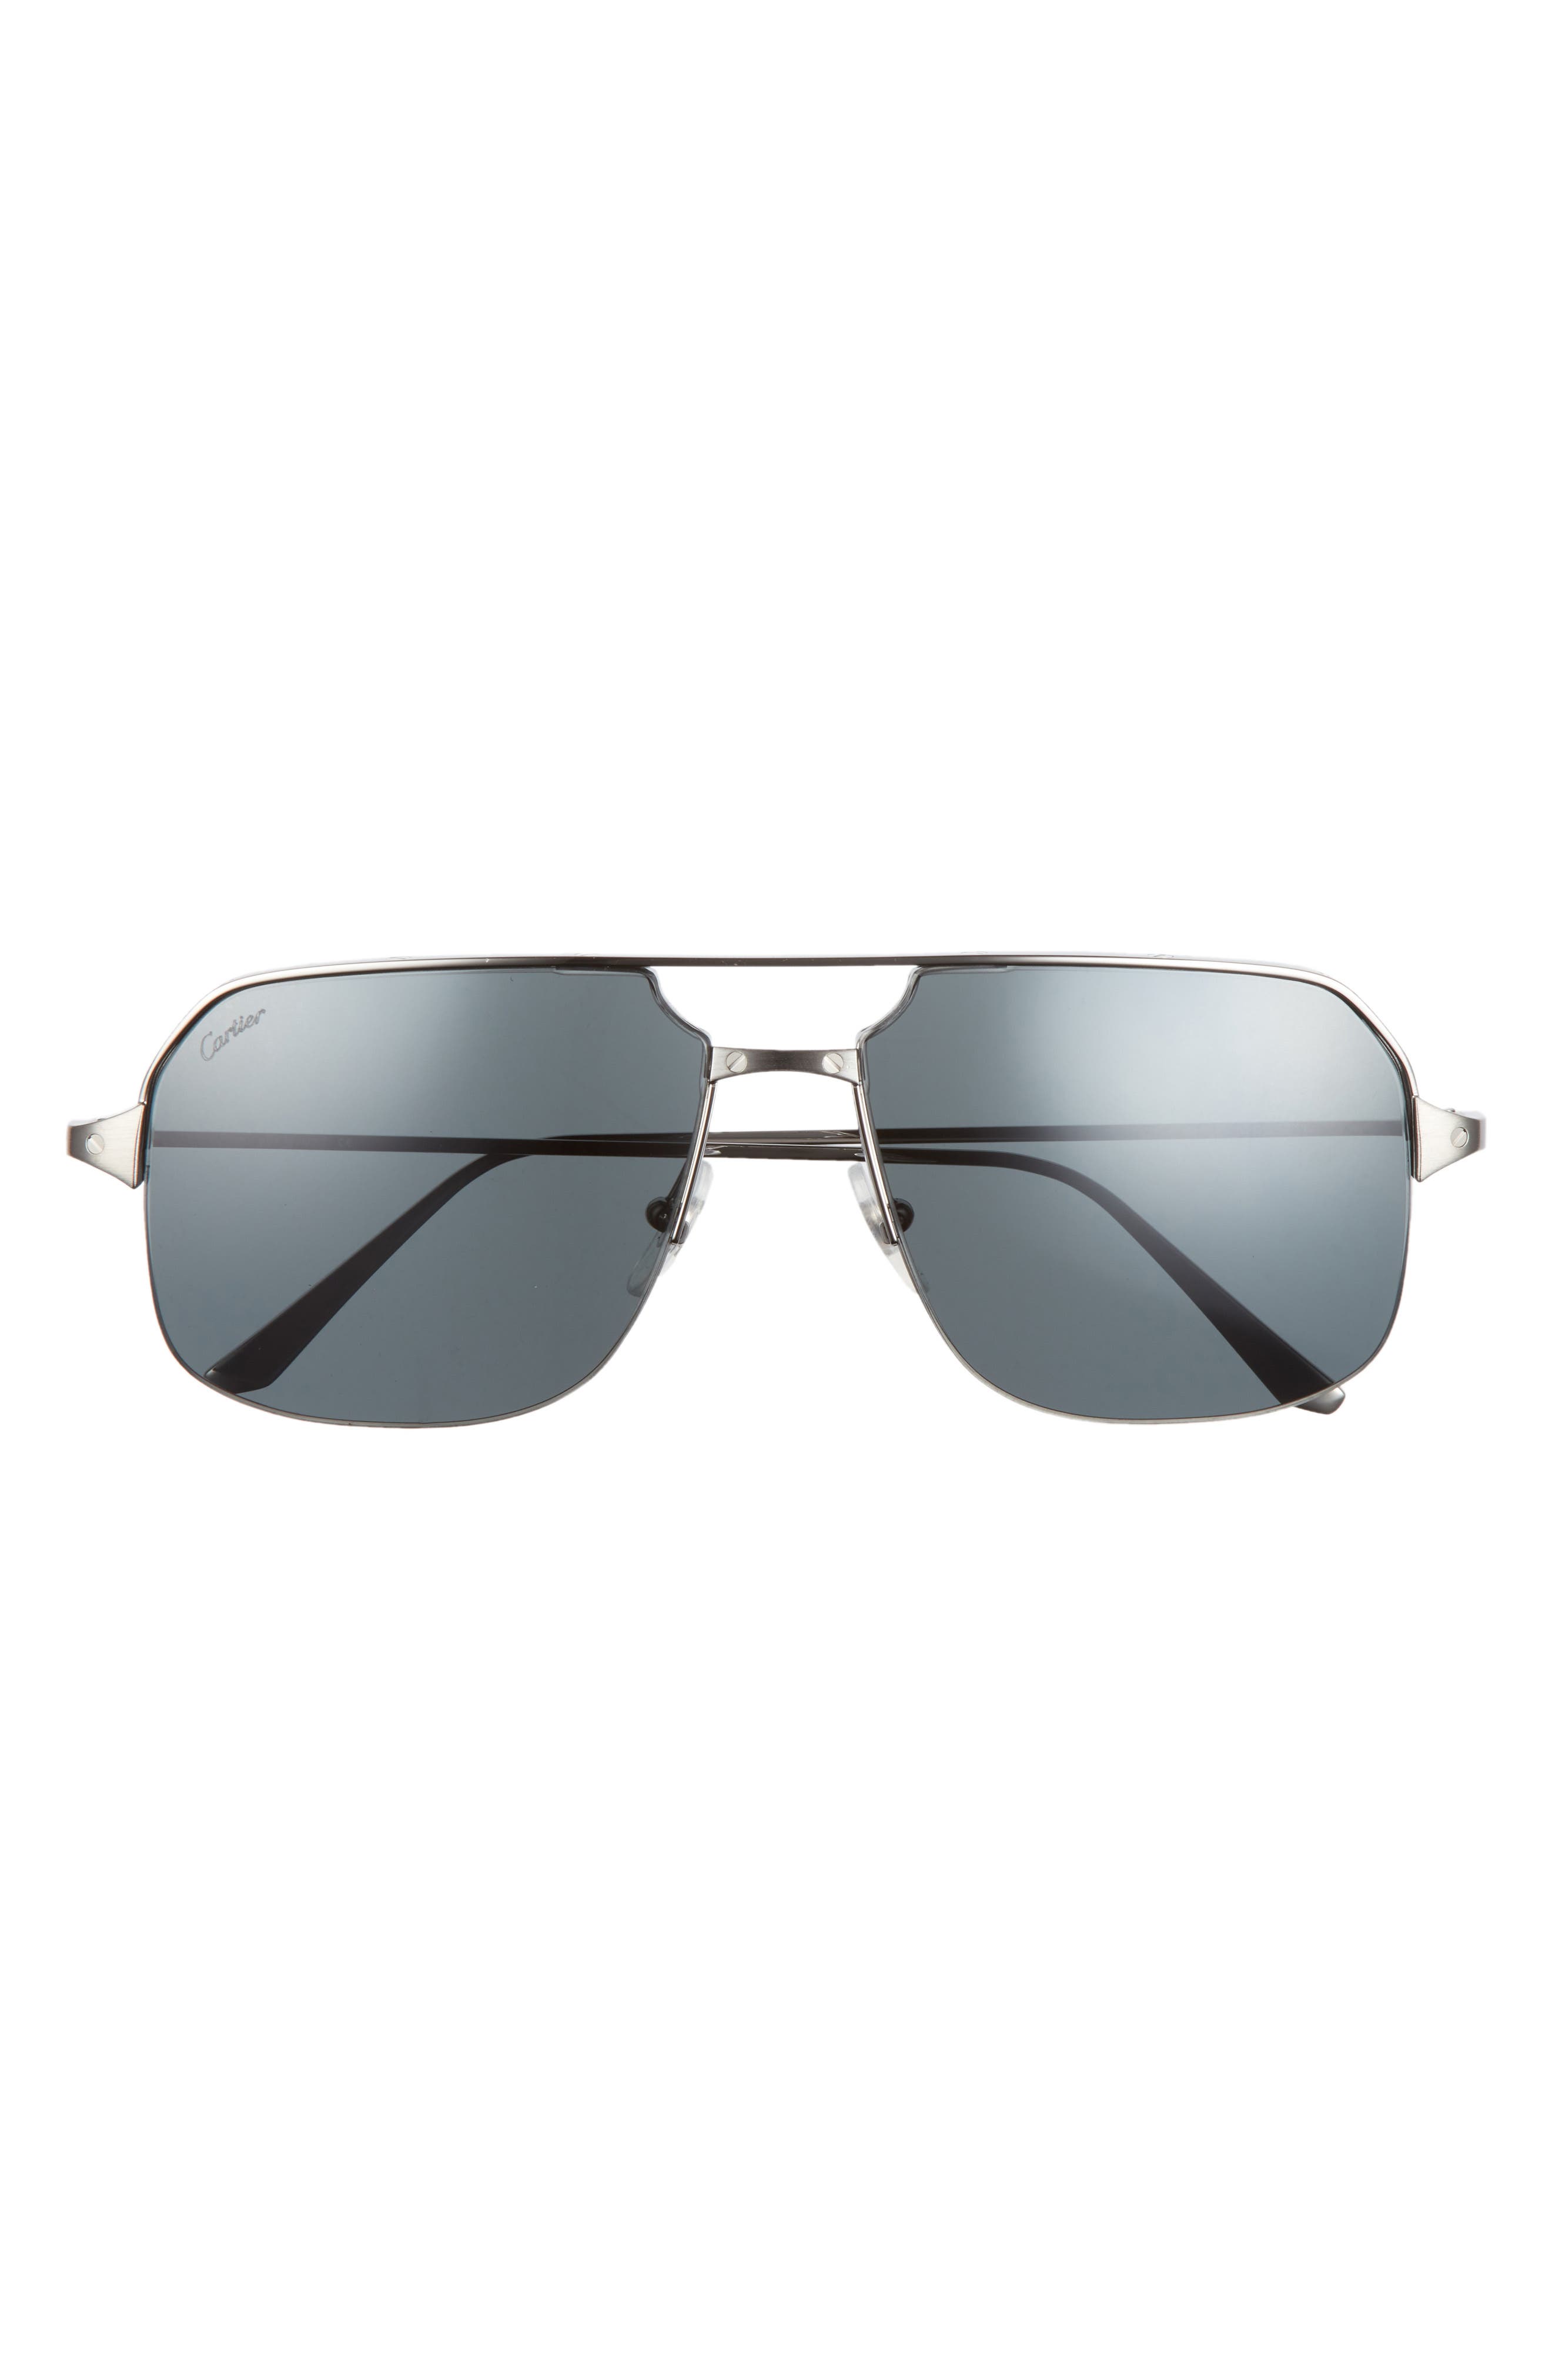 Cartier 59mm Aviator Sunglasses in Ruthenium at Nordstrom